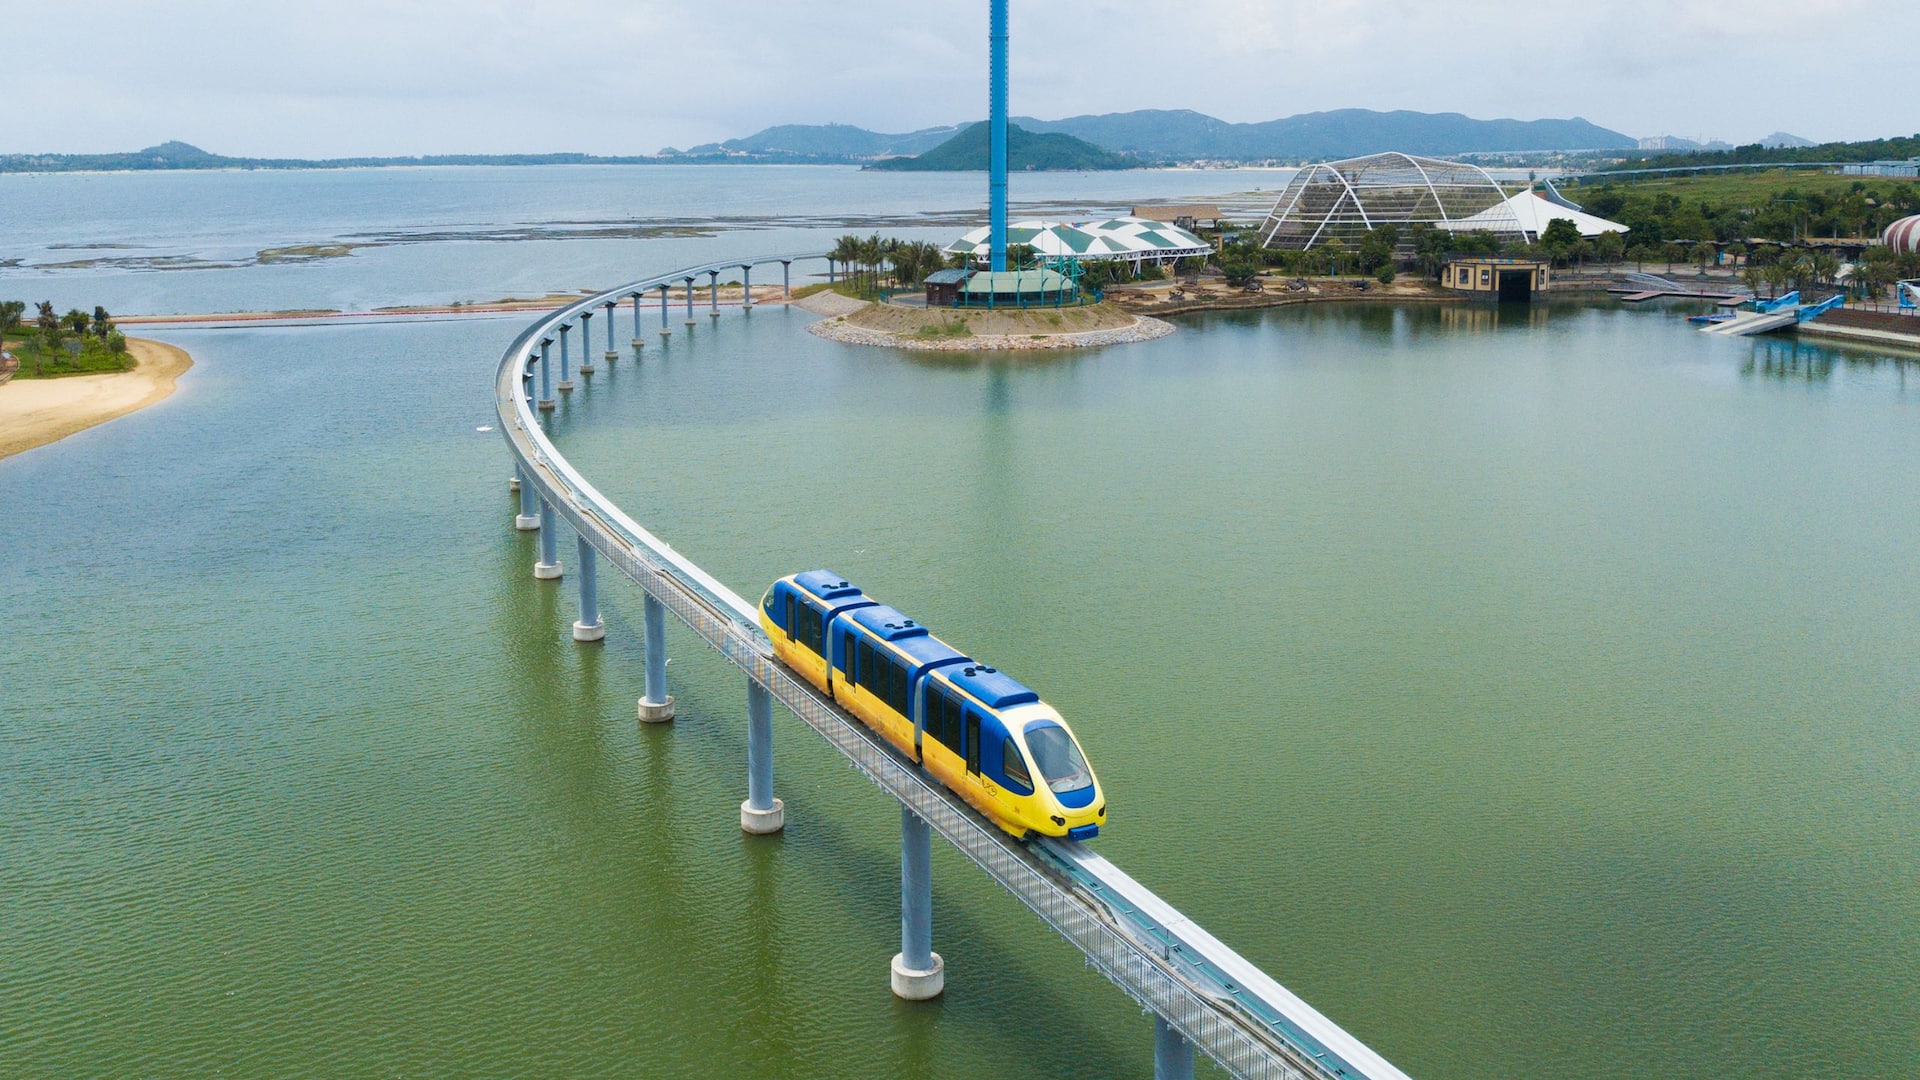 South China Train